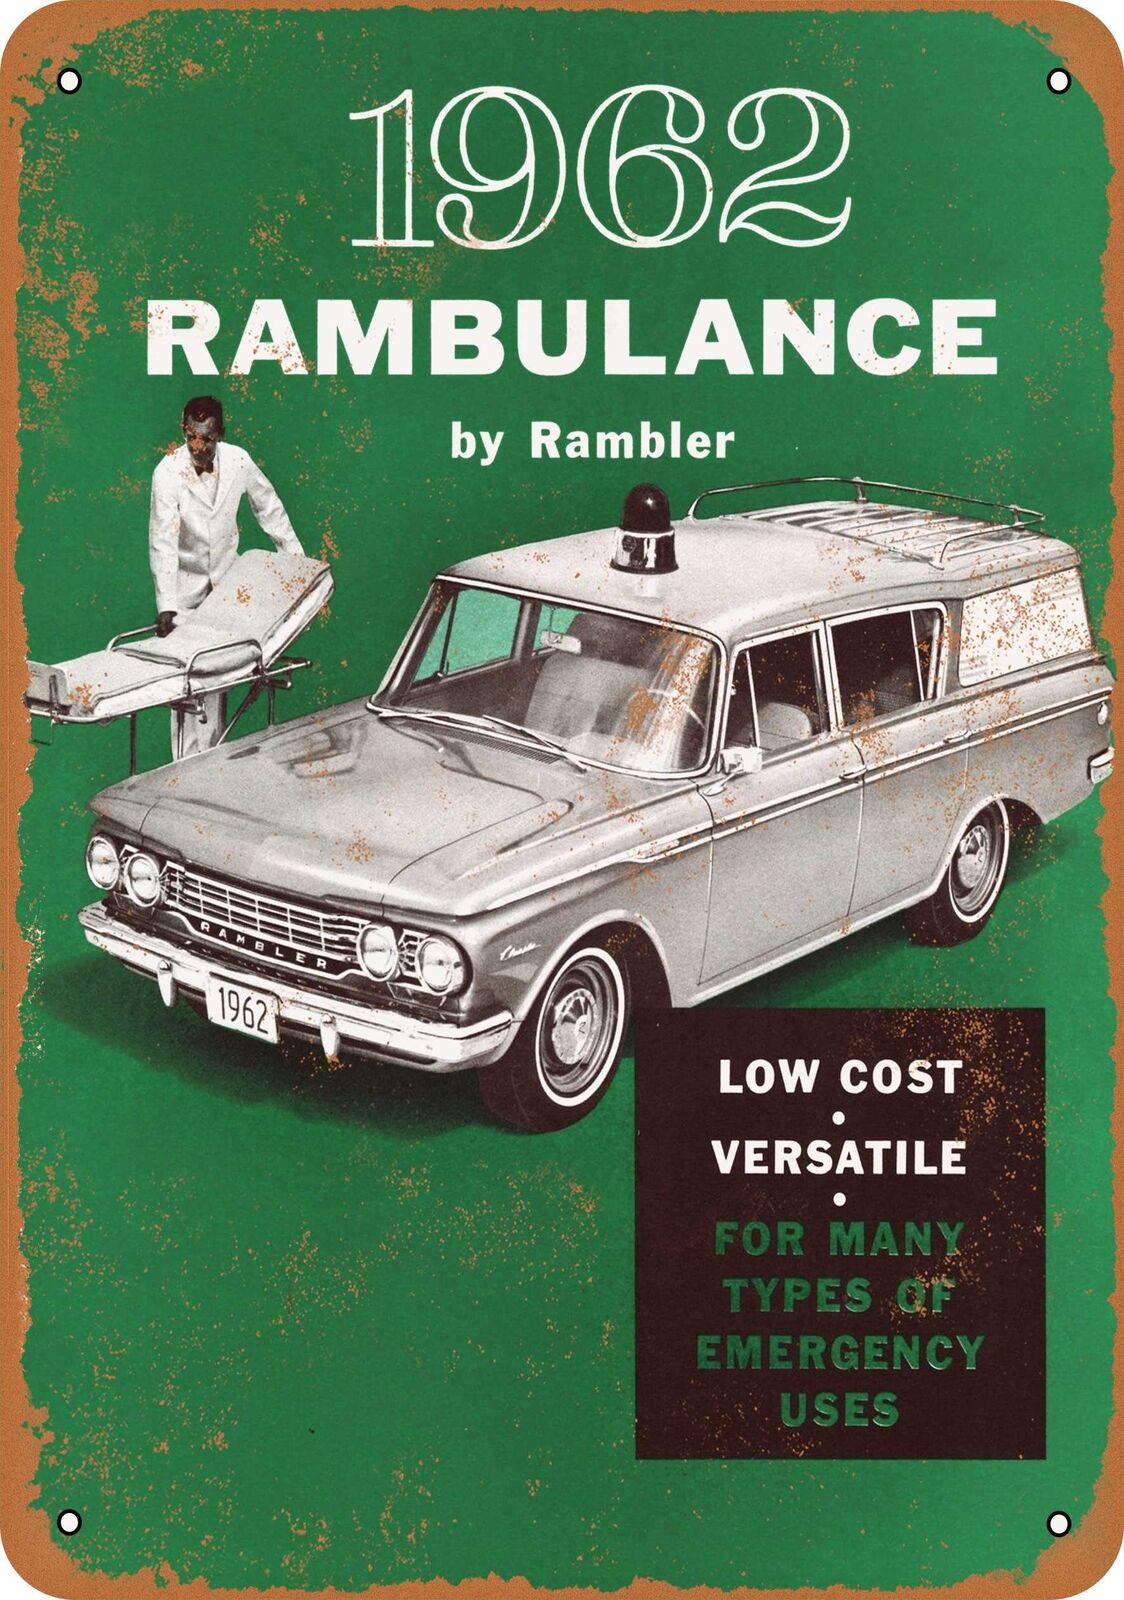 Metal Sign - 1962 Rambler Ambulance - Vintage Look Reproduction